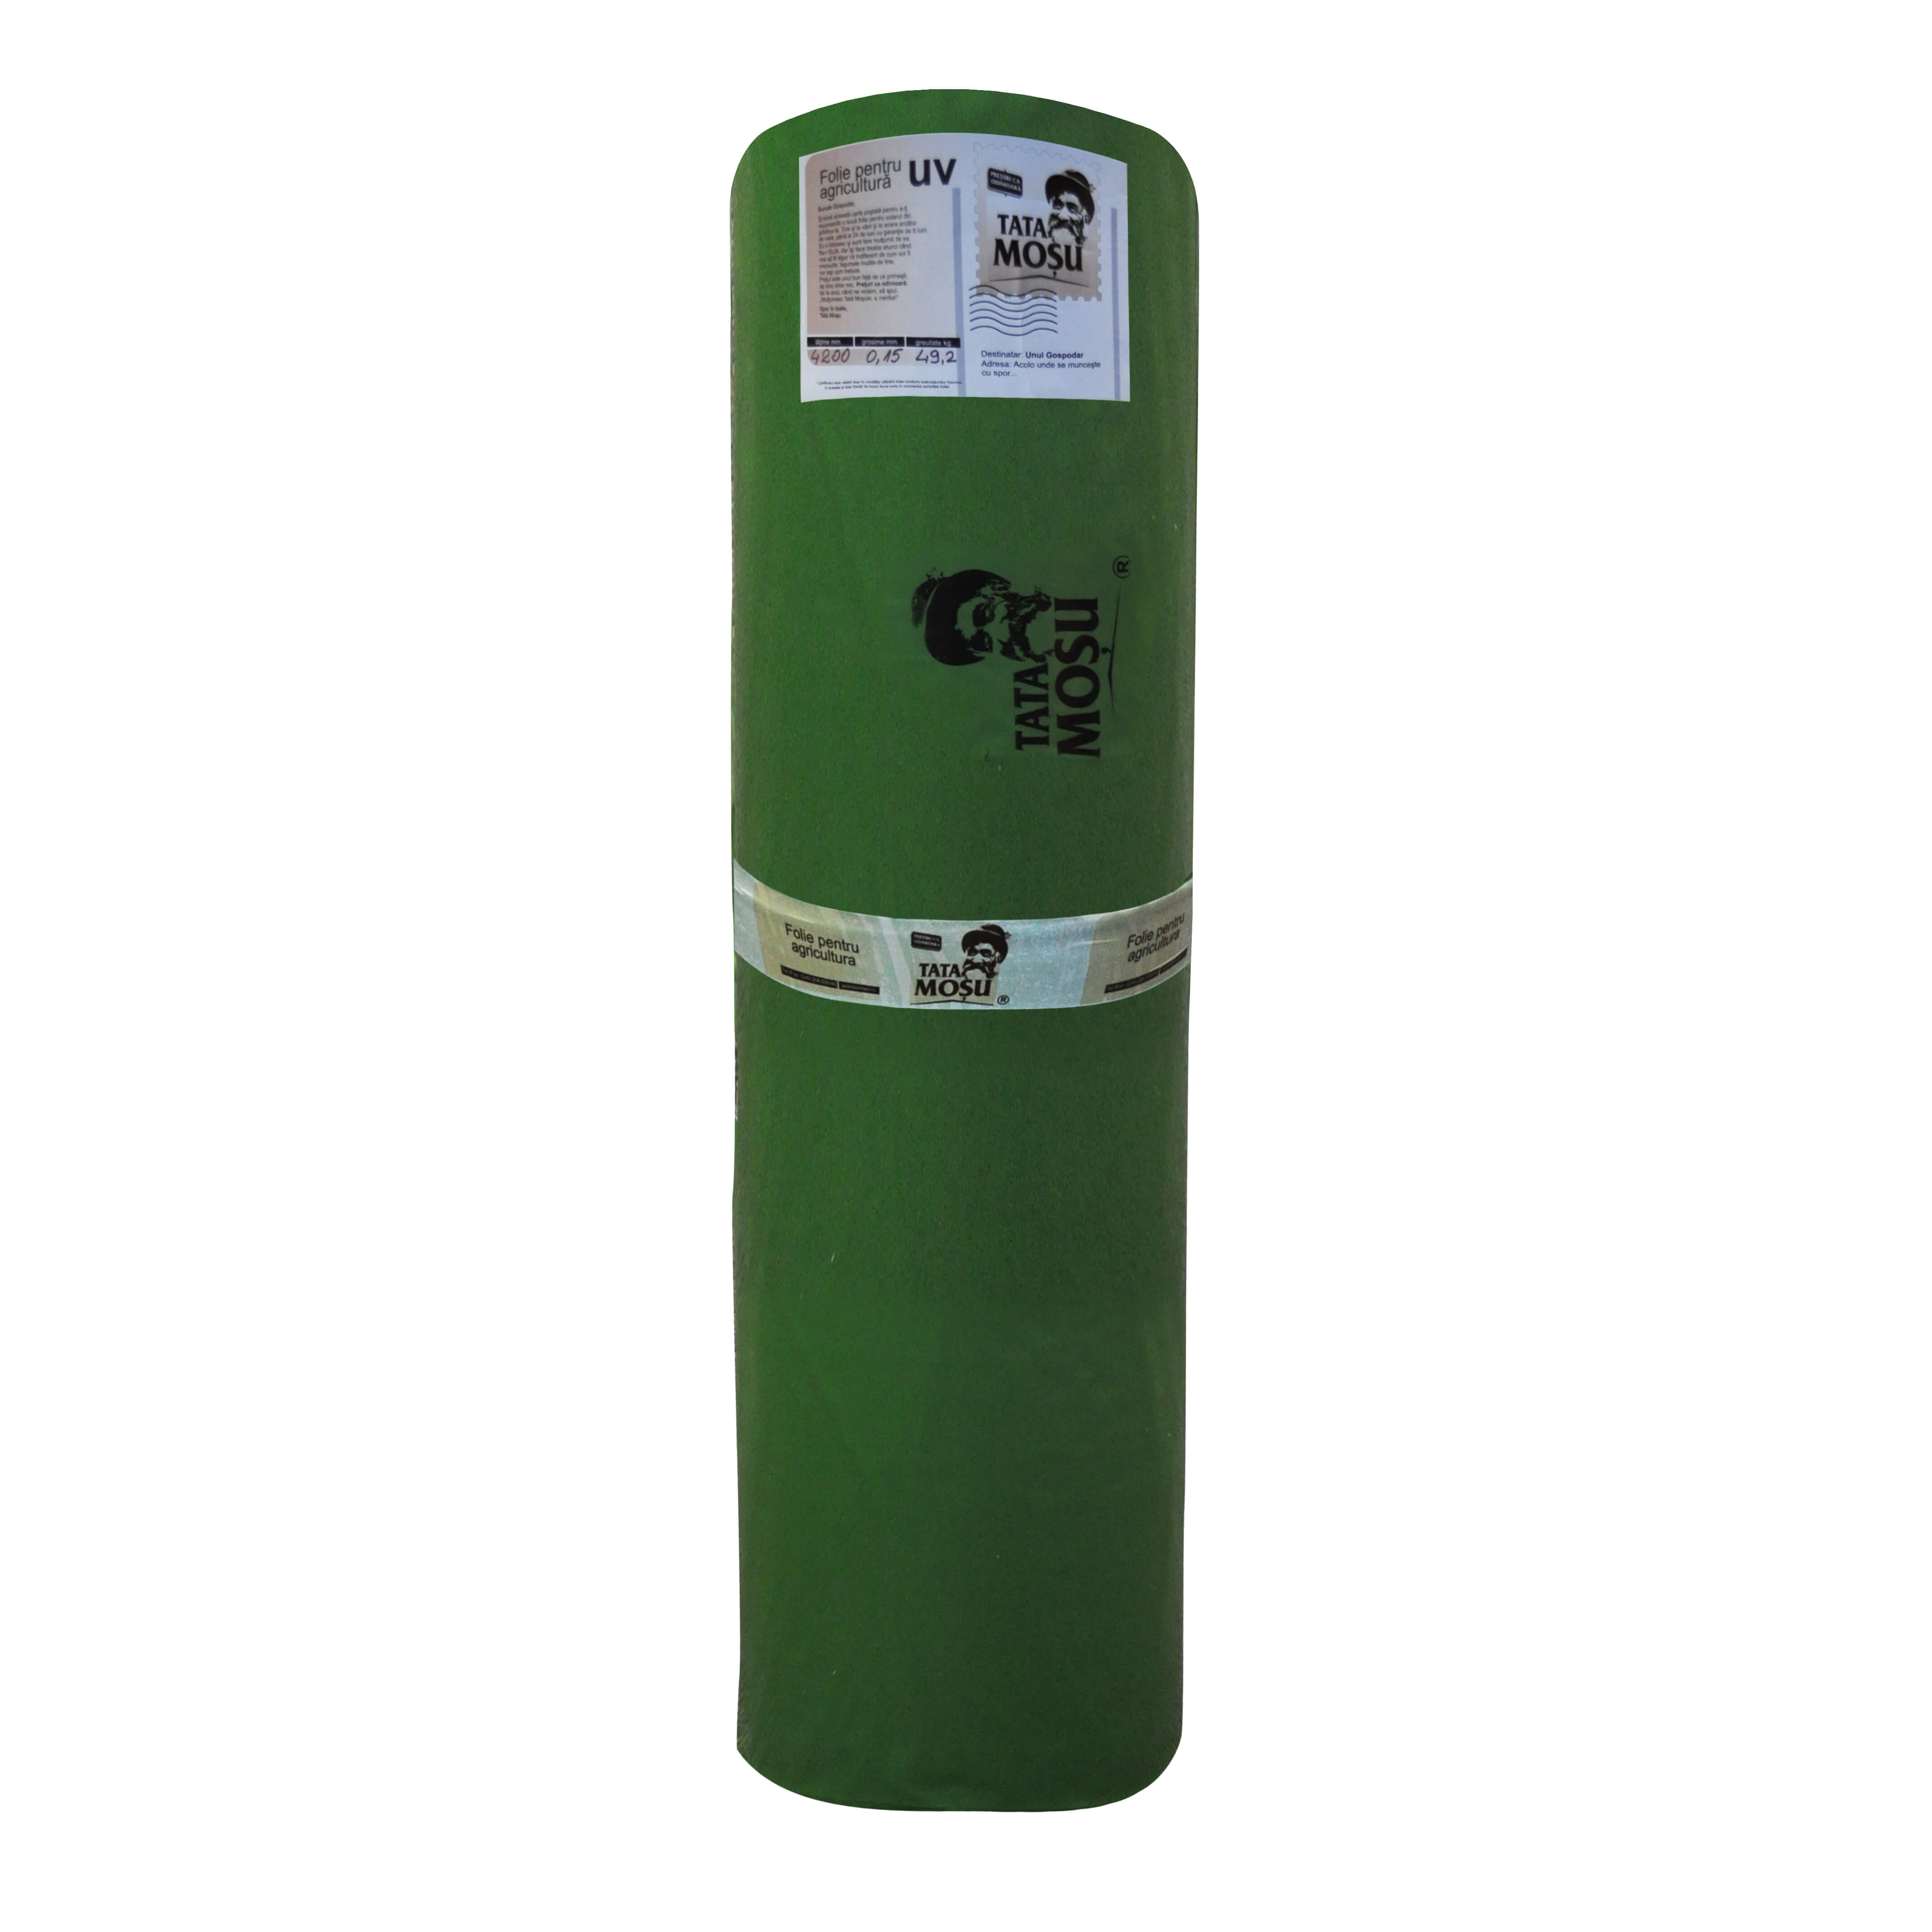 Folie polietilena Tata Mosu, 0.15 mm grosime, PE reciclat+UV, verde, latime 10.2 m 0.15